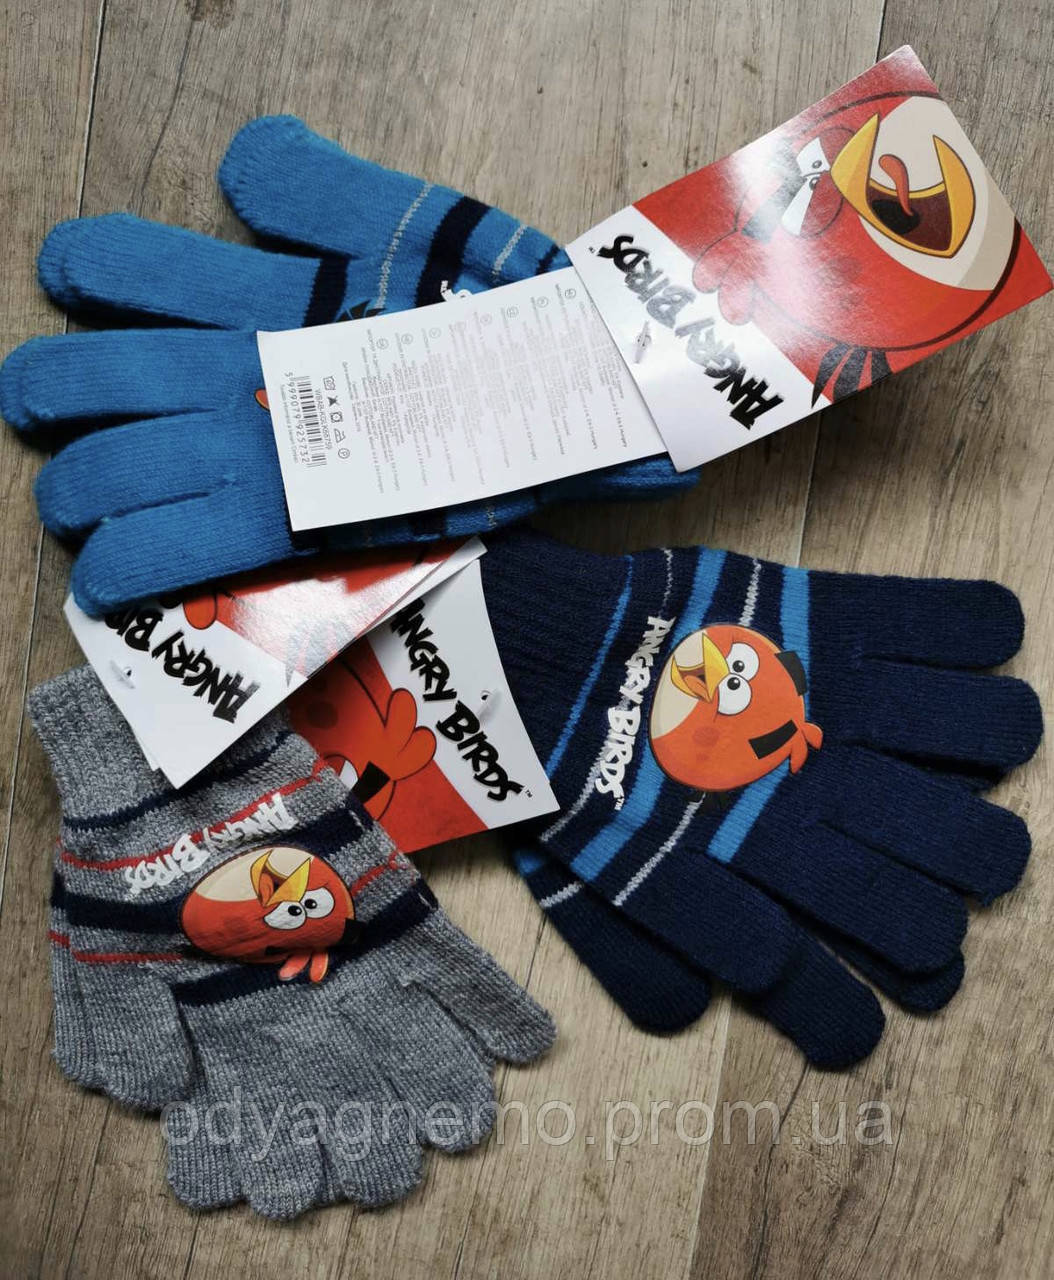 Перчатки для мальчиков Angry Birds оптом. Артикул: 68759, фото 1